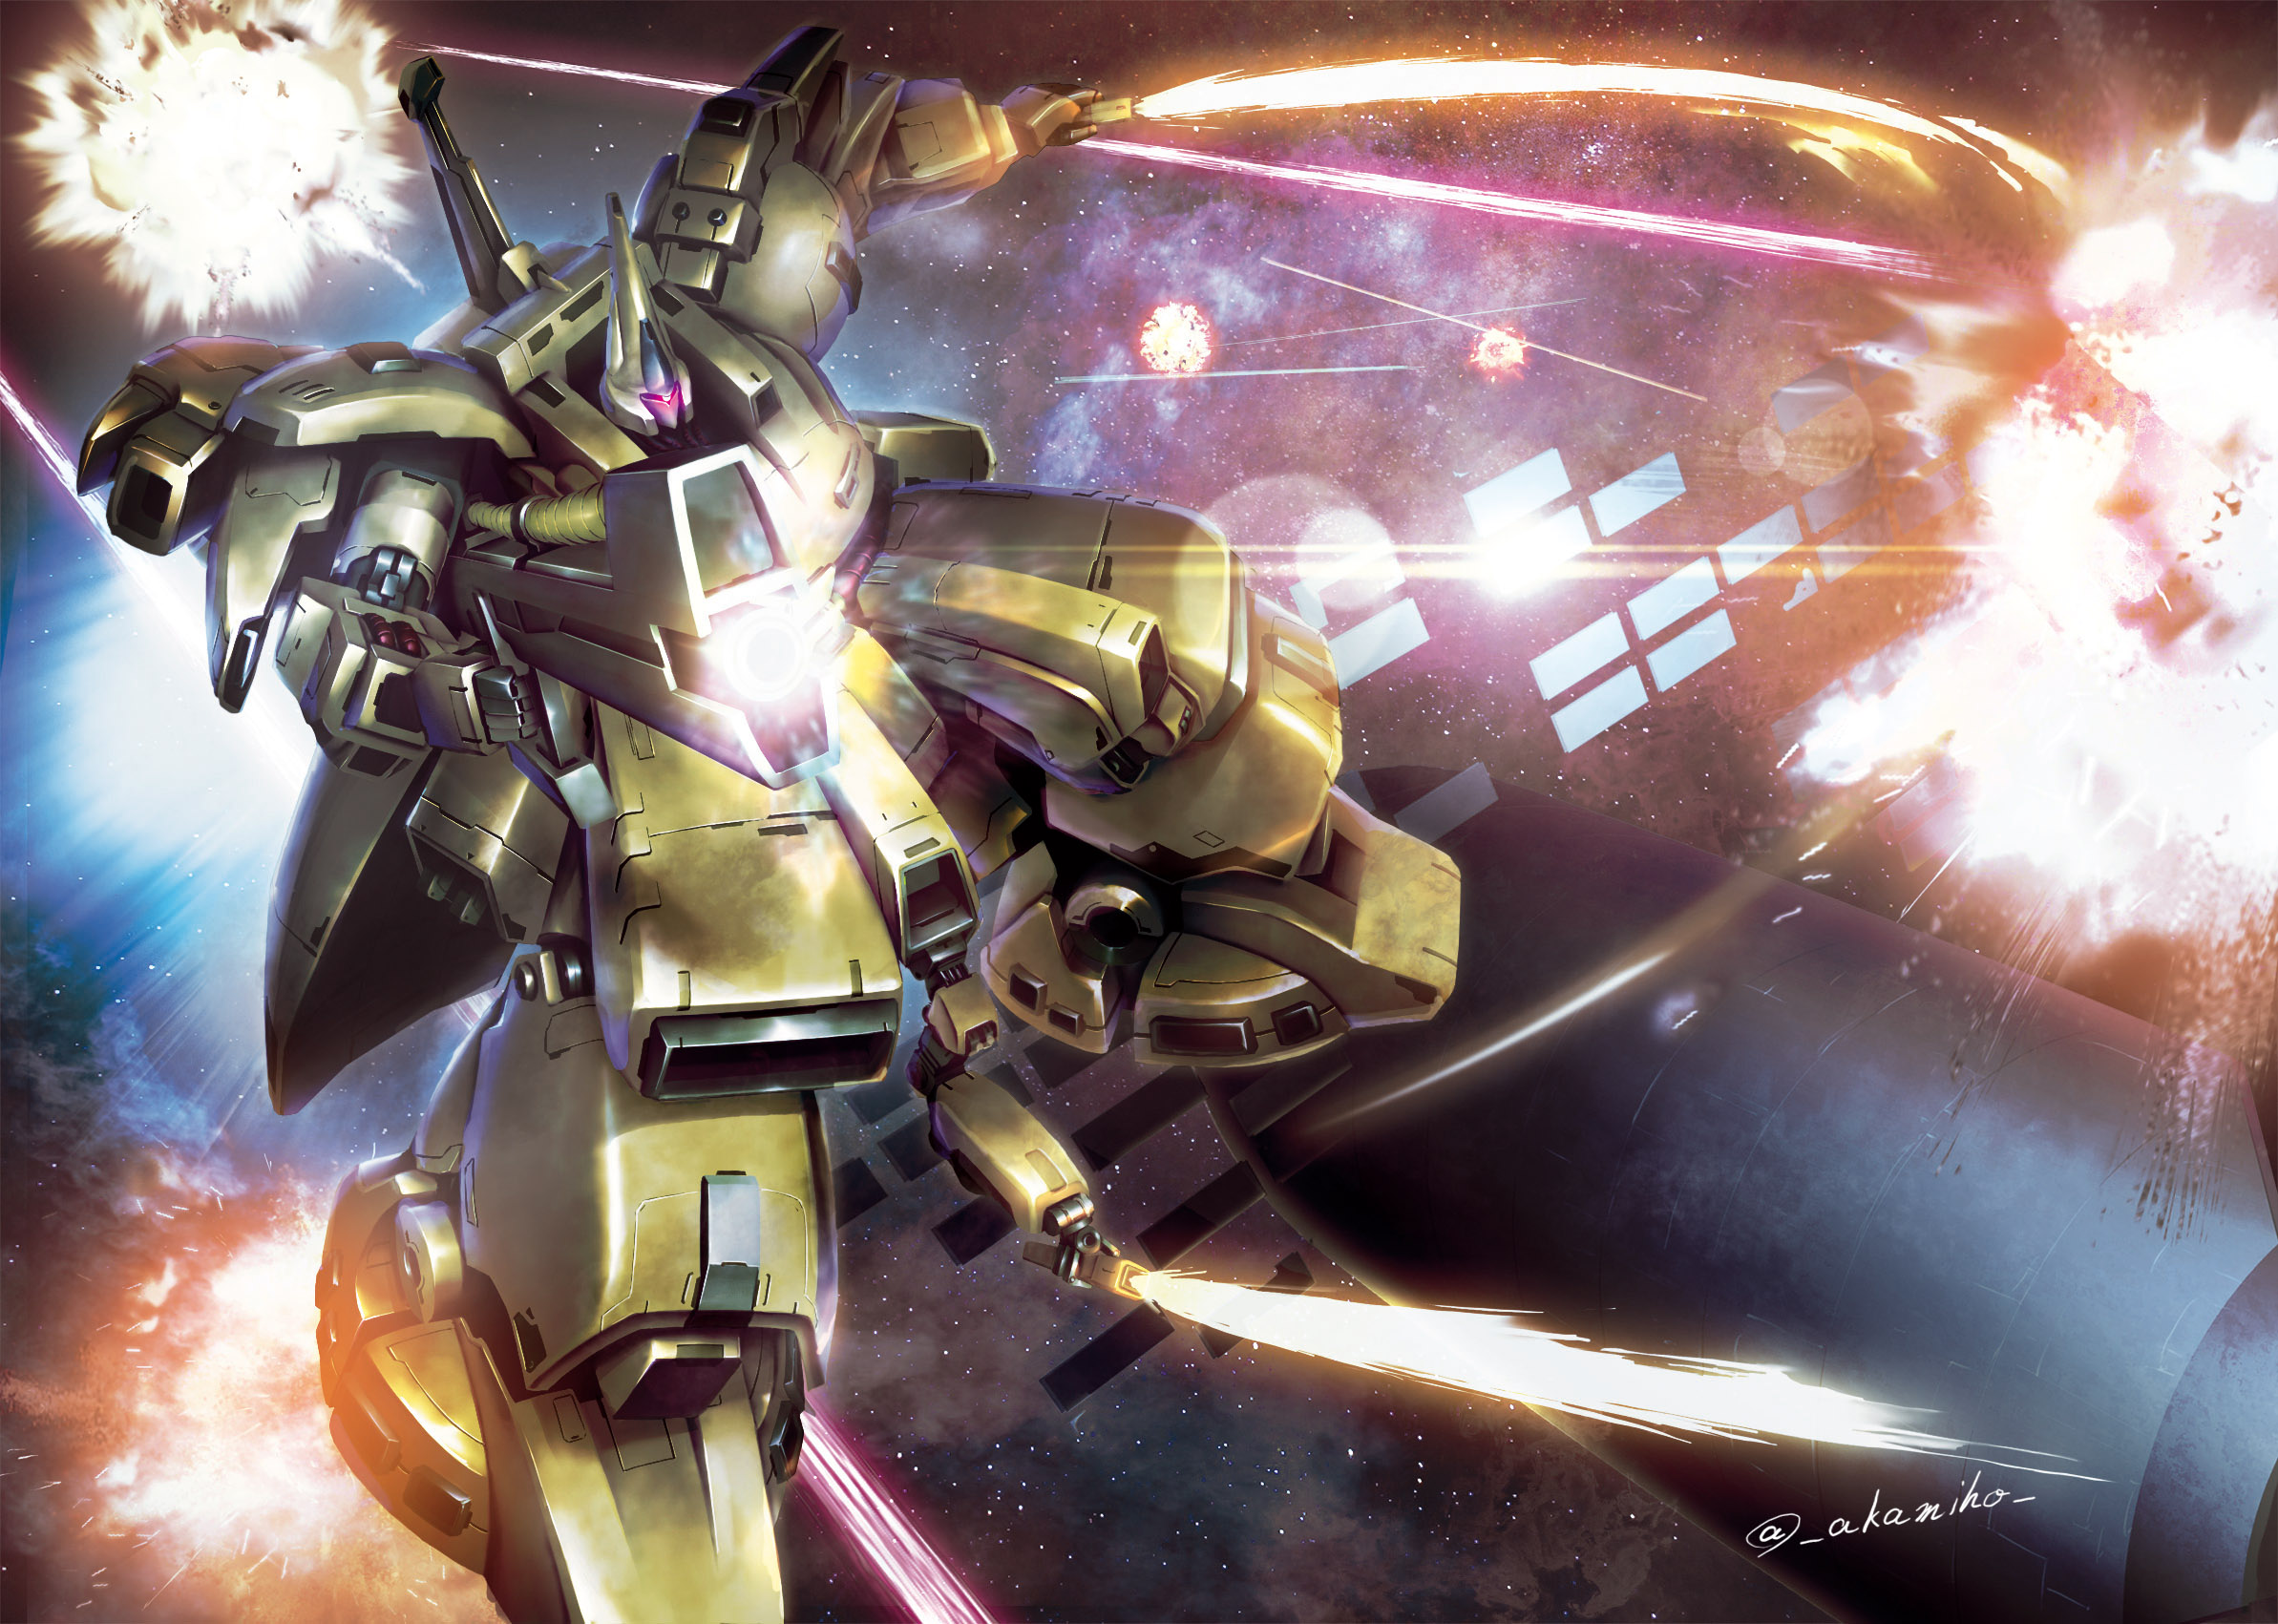 The O Mobile Suit Zeta Gundam Mobile Suit Anime Mechs Super Robot Taisen Artwork Digital Art Fan Art 2386x1701